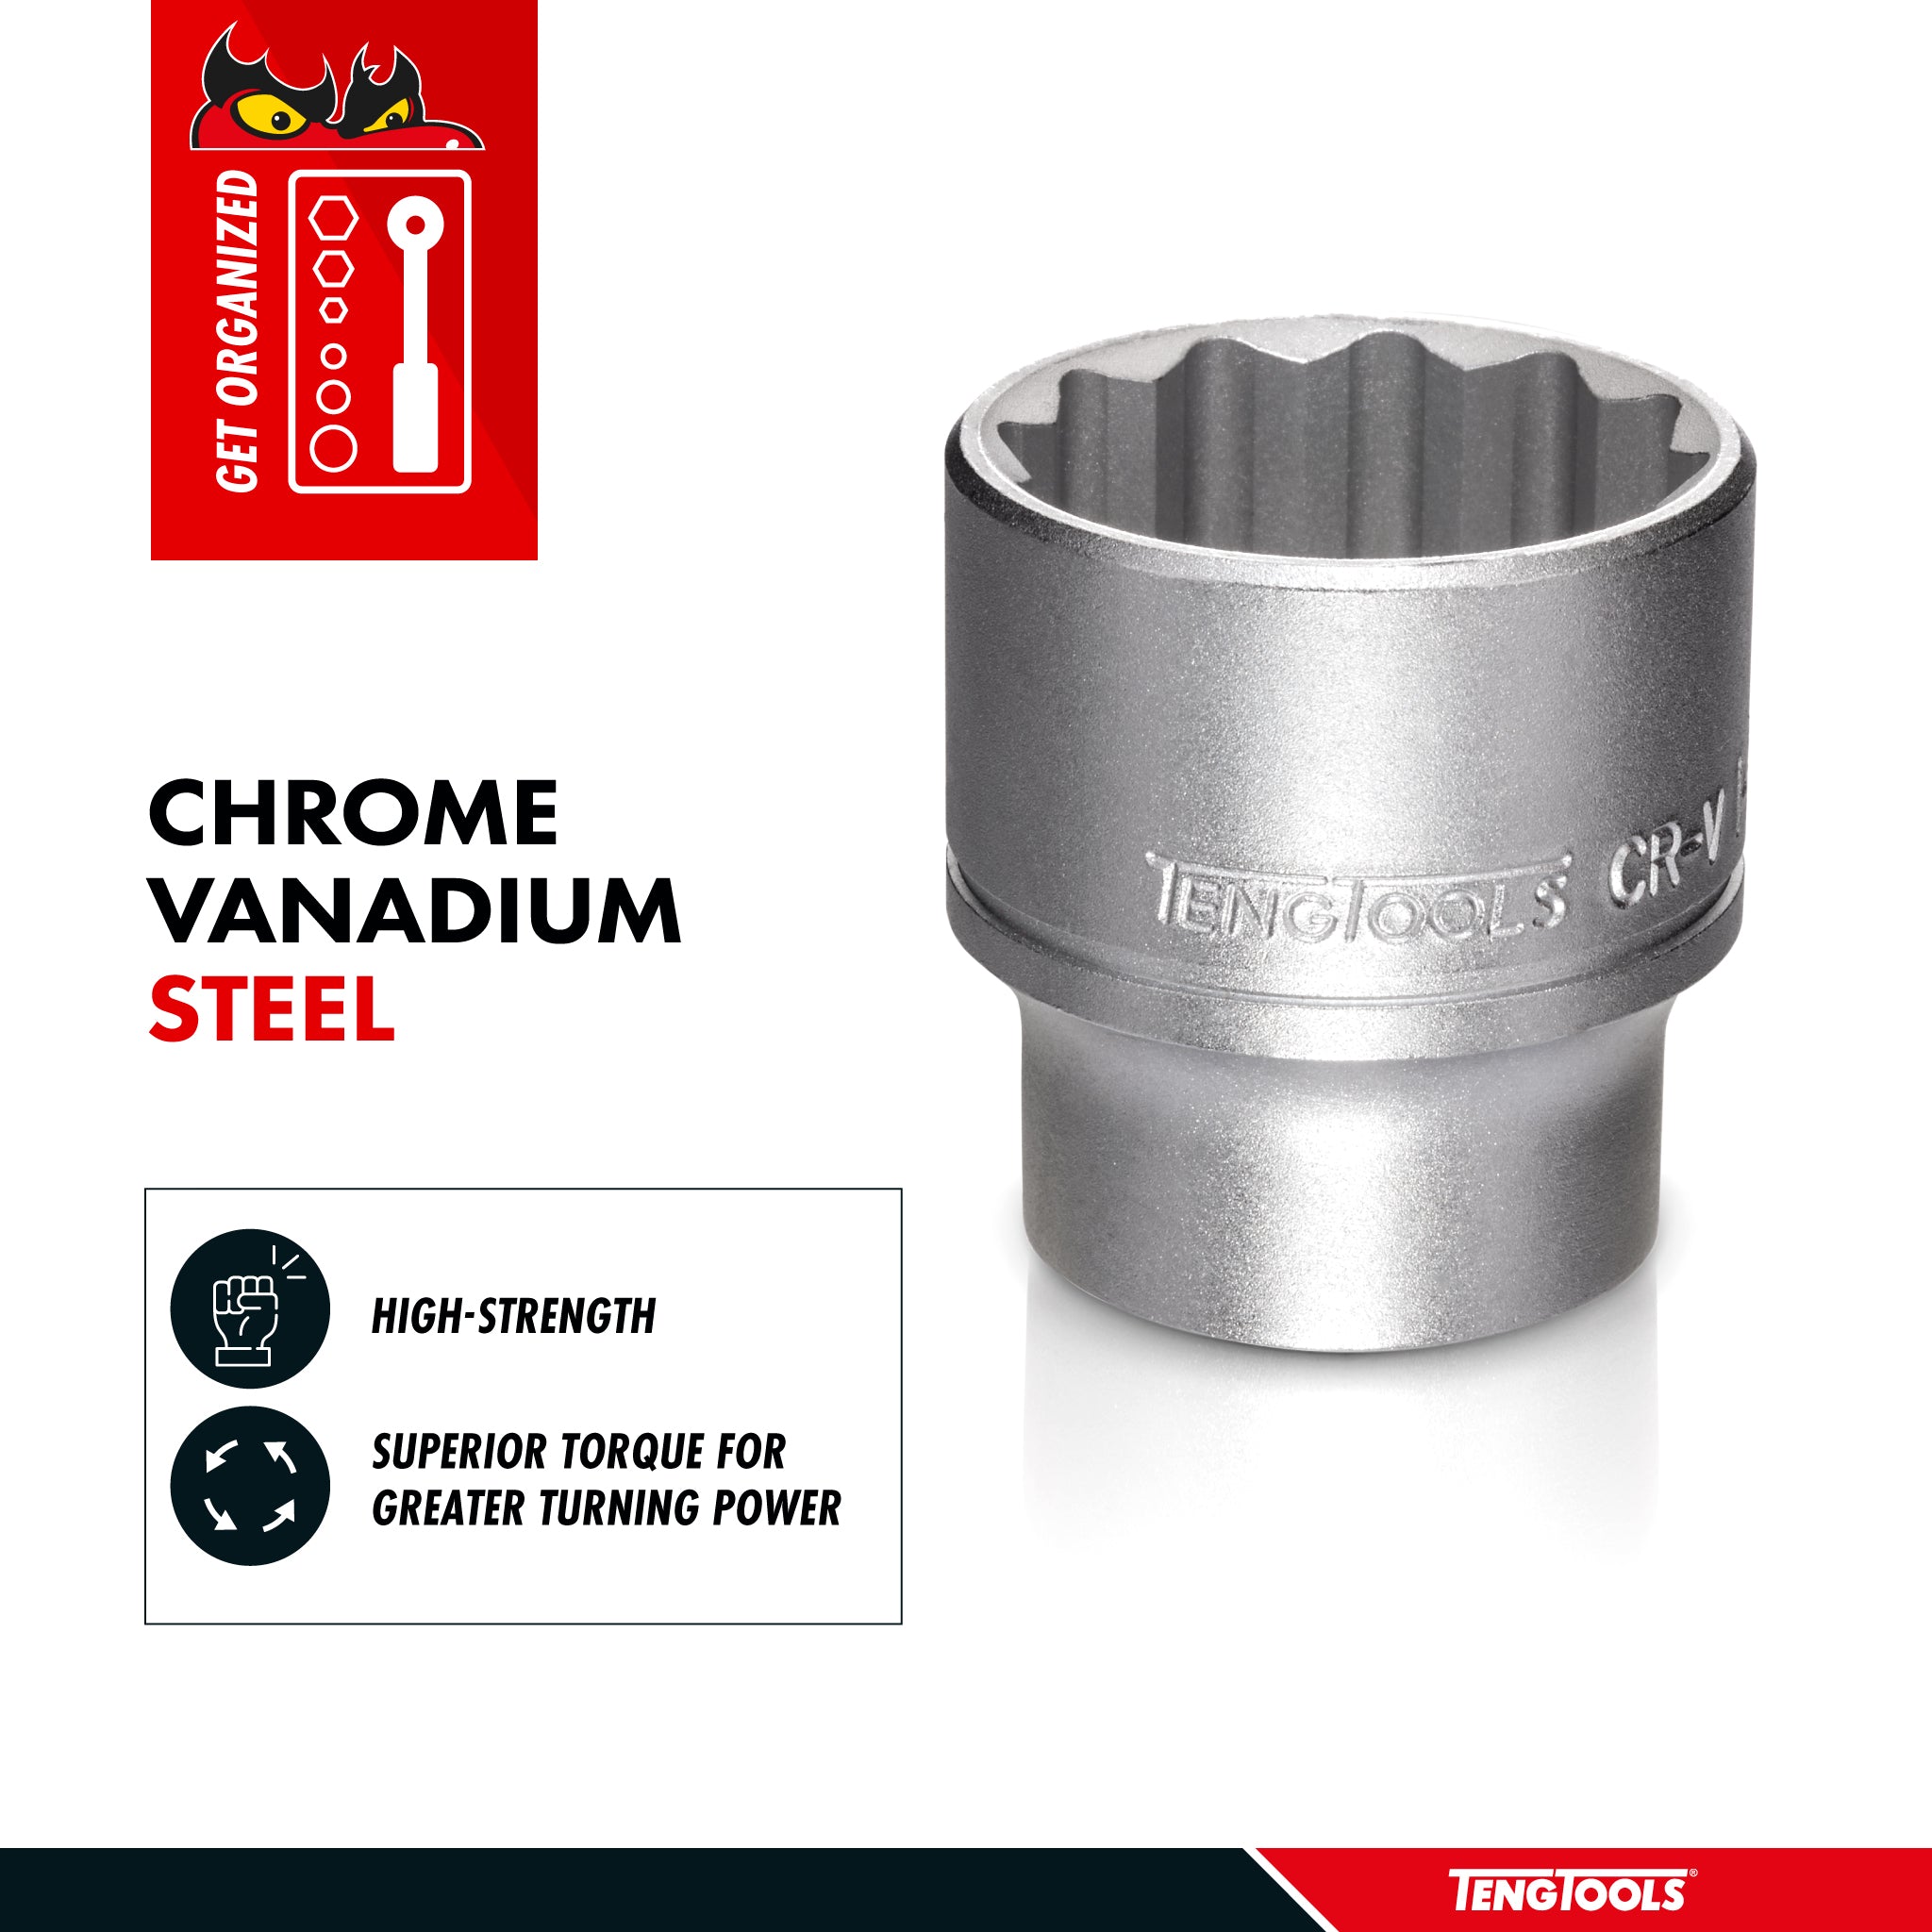 Teng Tools 1/2 Inch Drive 12 Point Metric Shallow Chrome Vanadium Sockets - 8mm